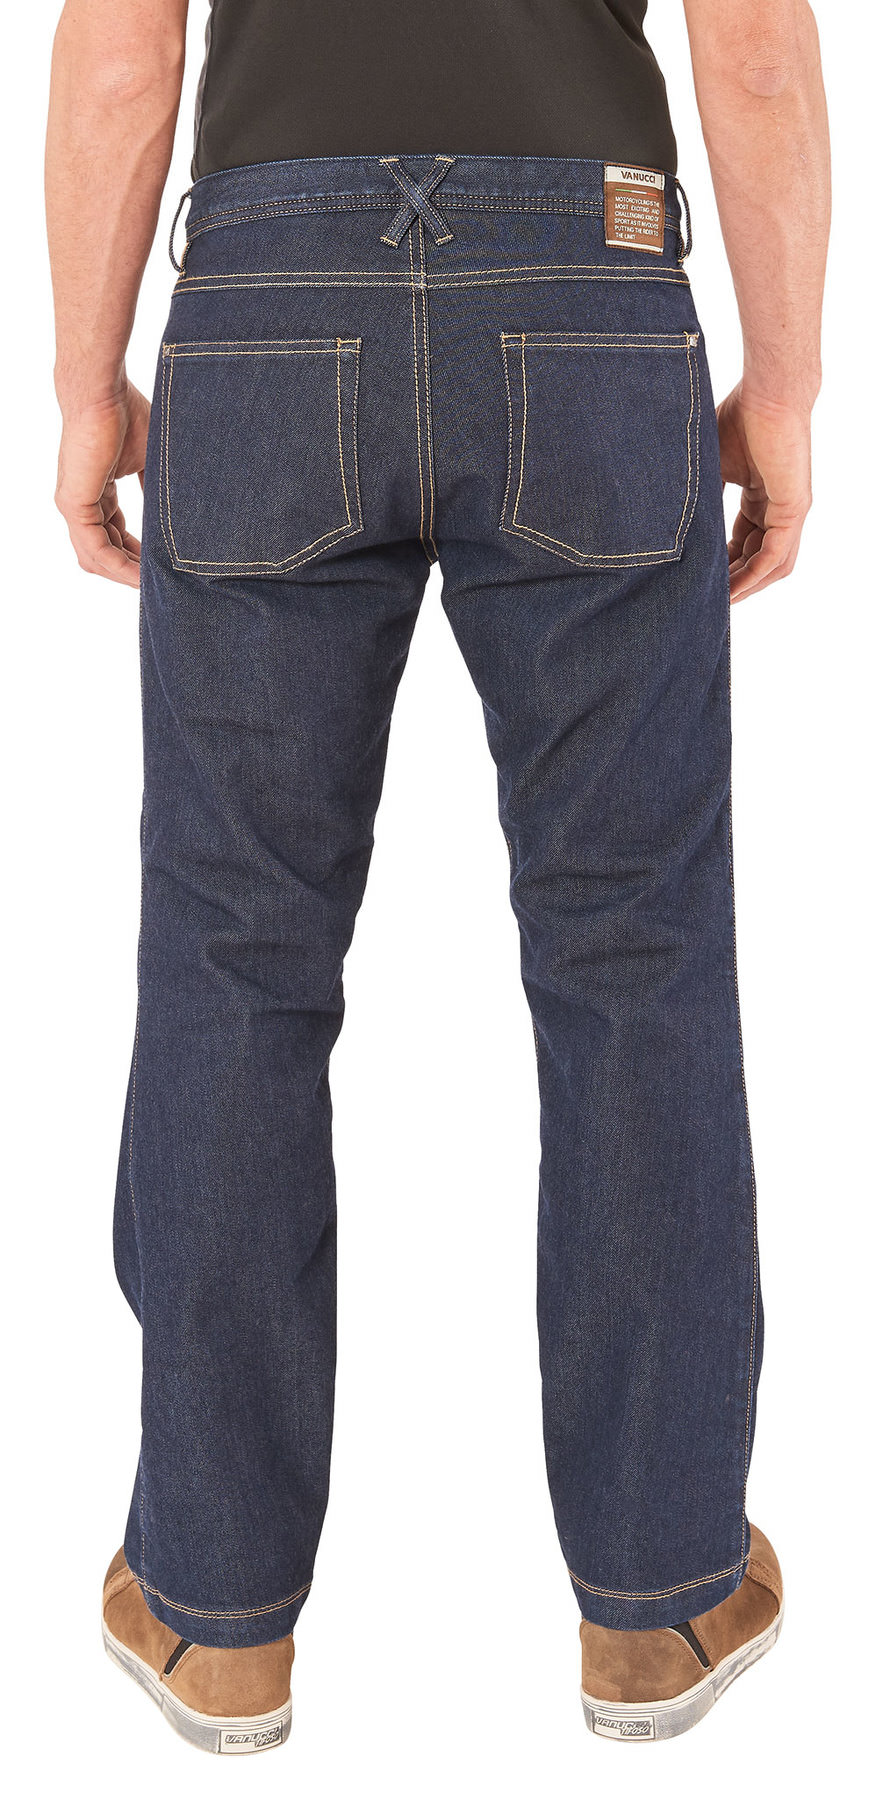 Vanucci Cordura 2 Jeans low-cost | Louis 🏍️